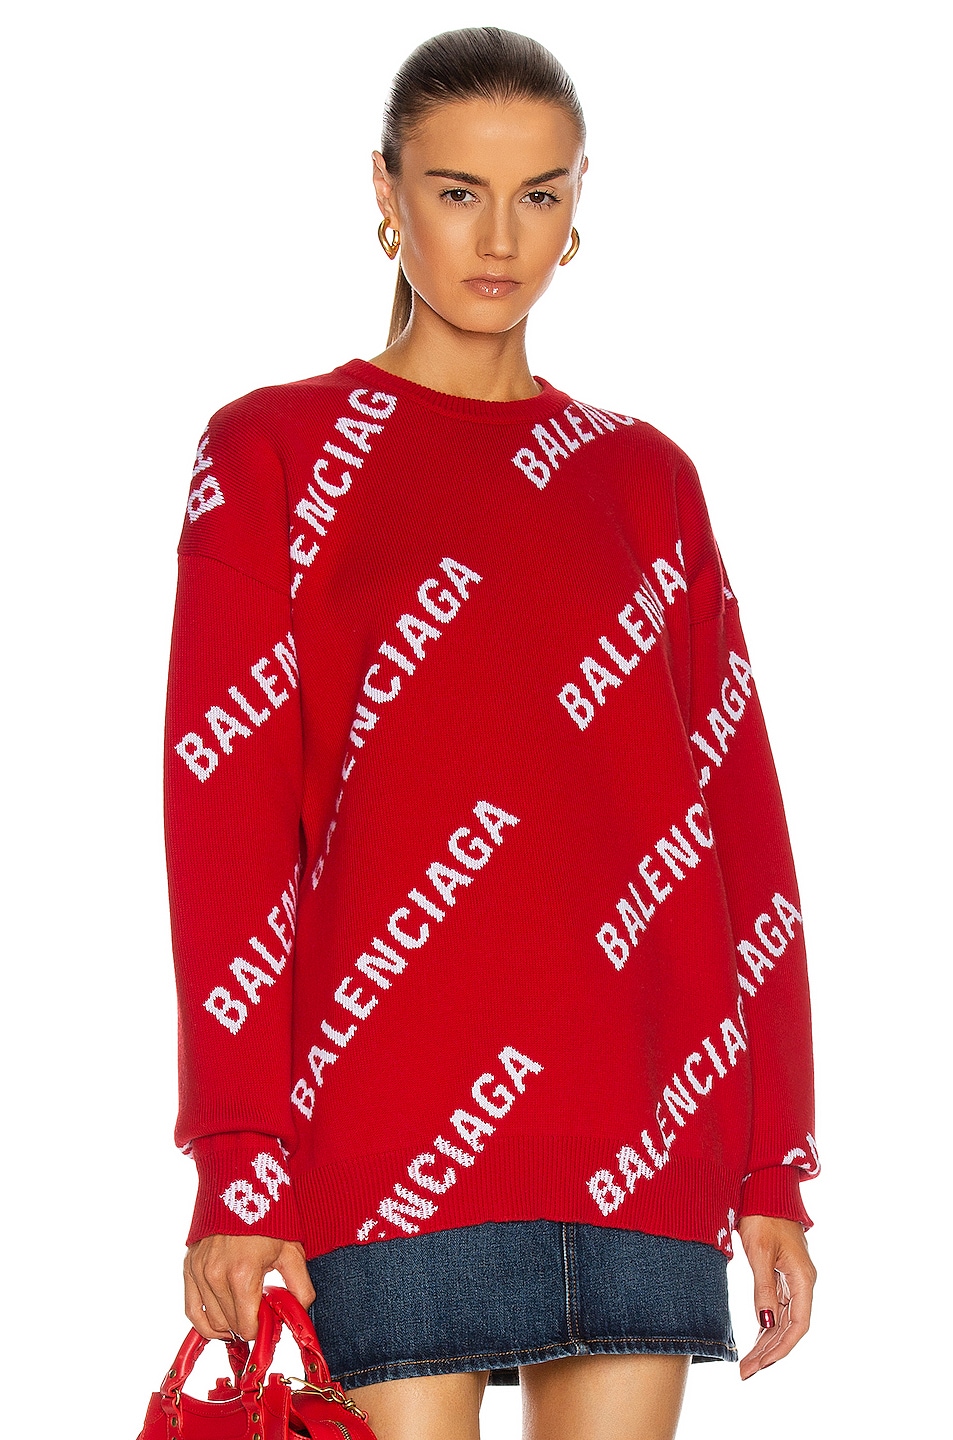 Balenciaga Long Sleeve Logo Crew Neck Sweater in Red & White | FWRD